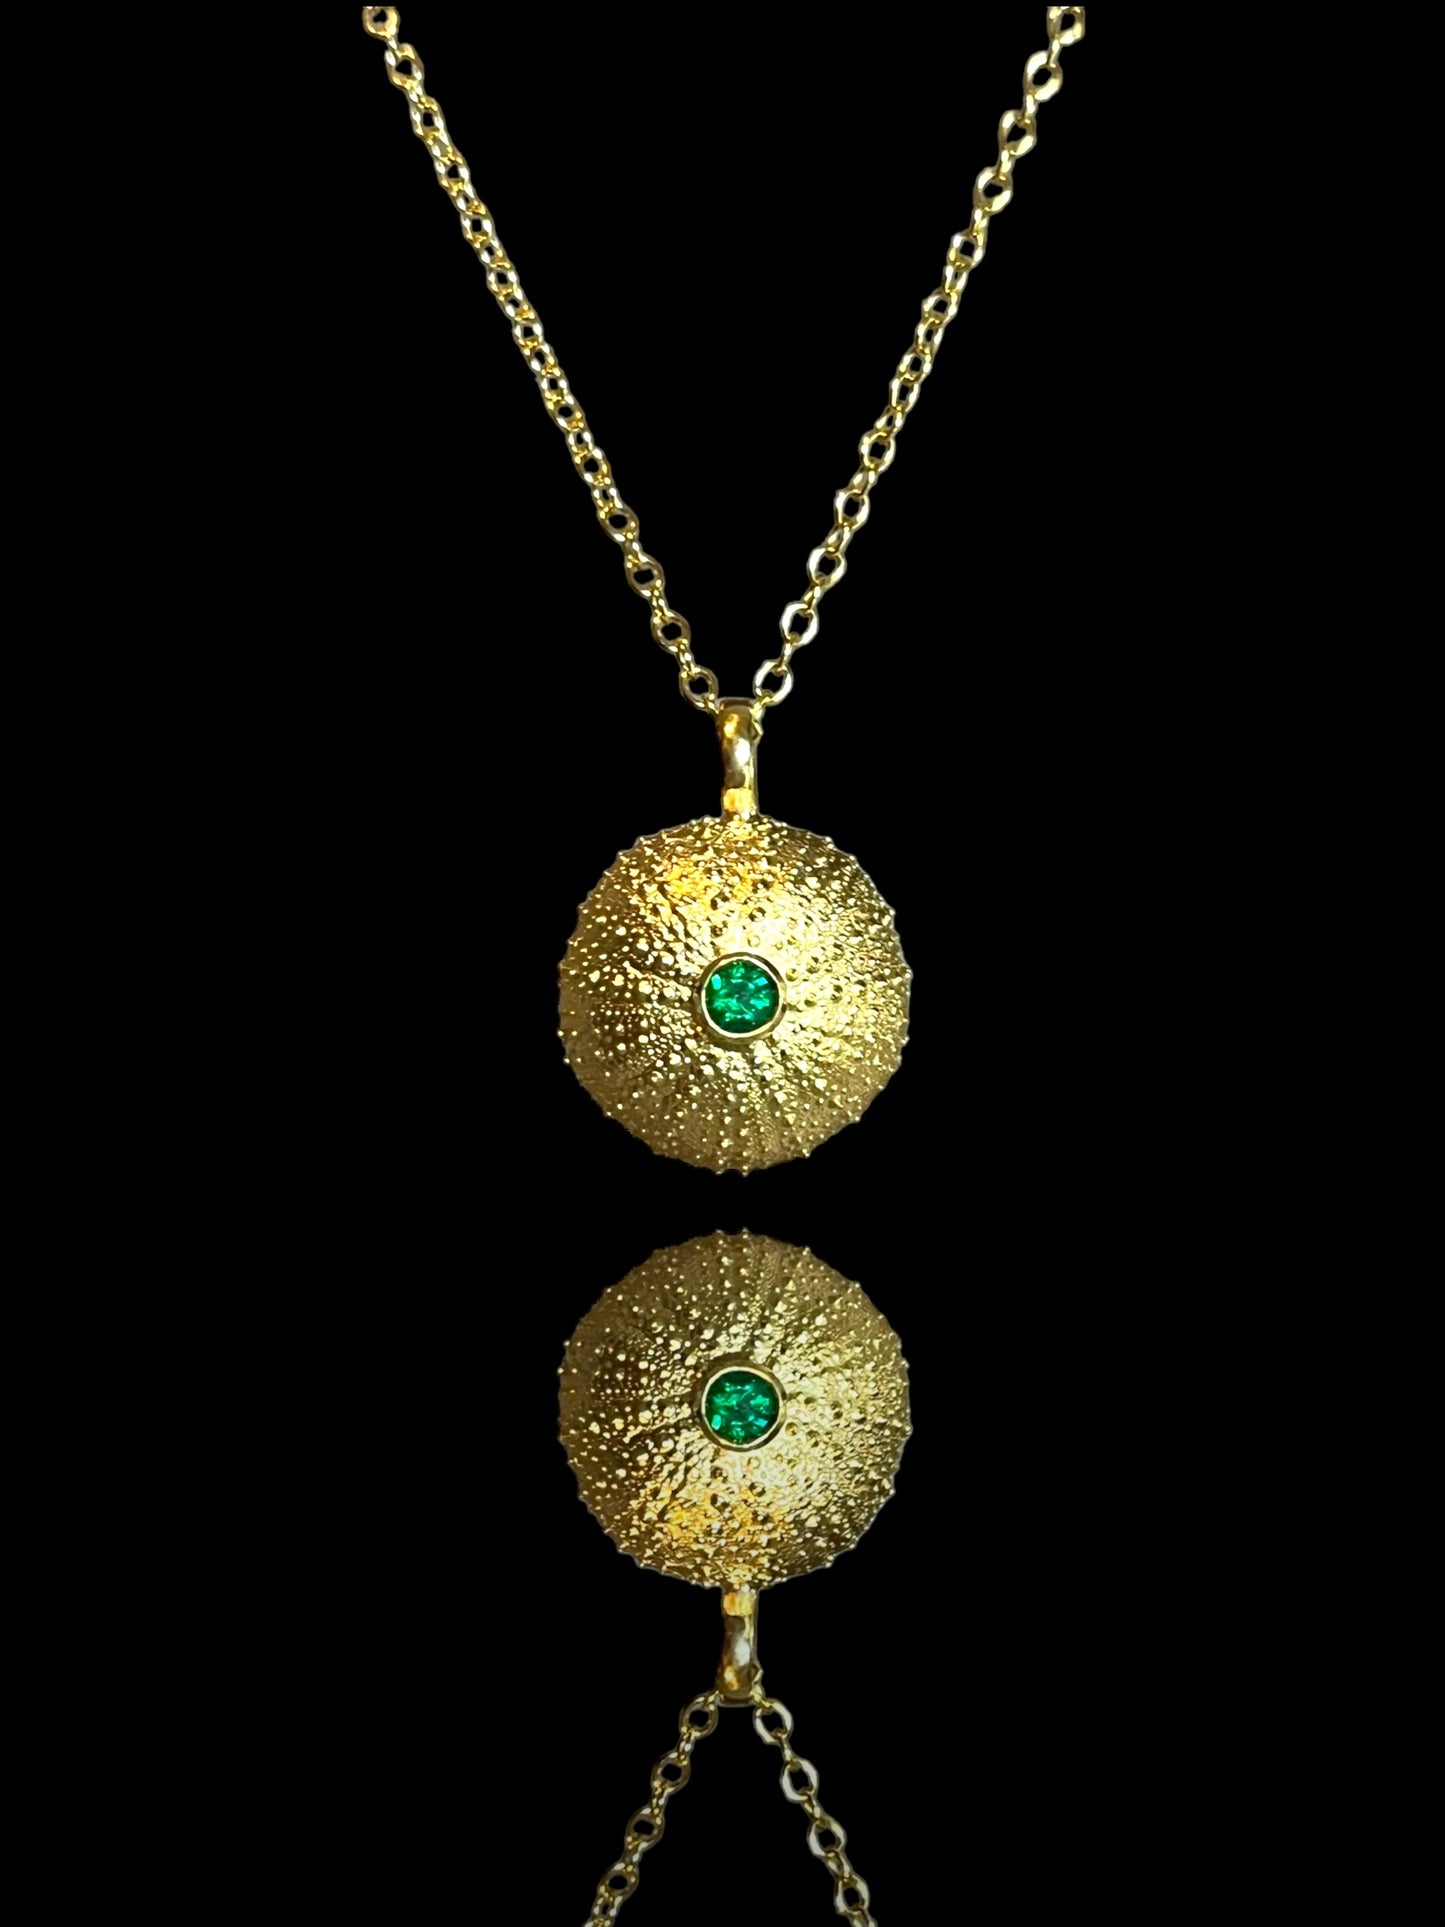 Sea Urchin Necklace in Gold vermeil